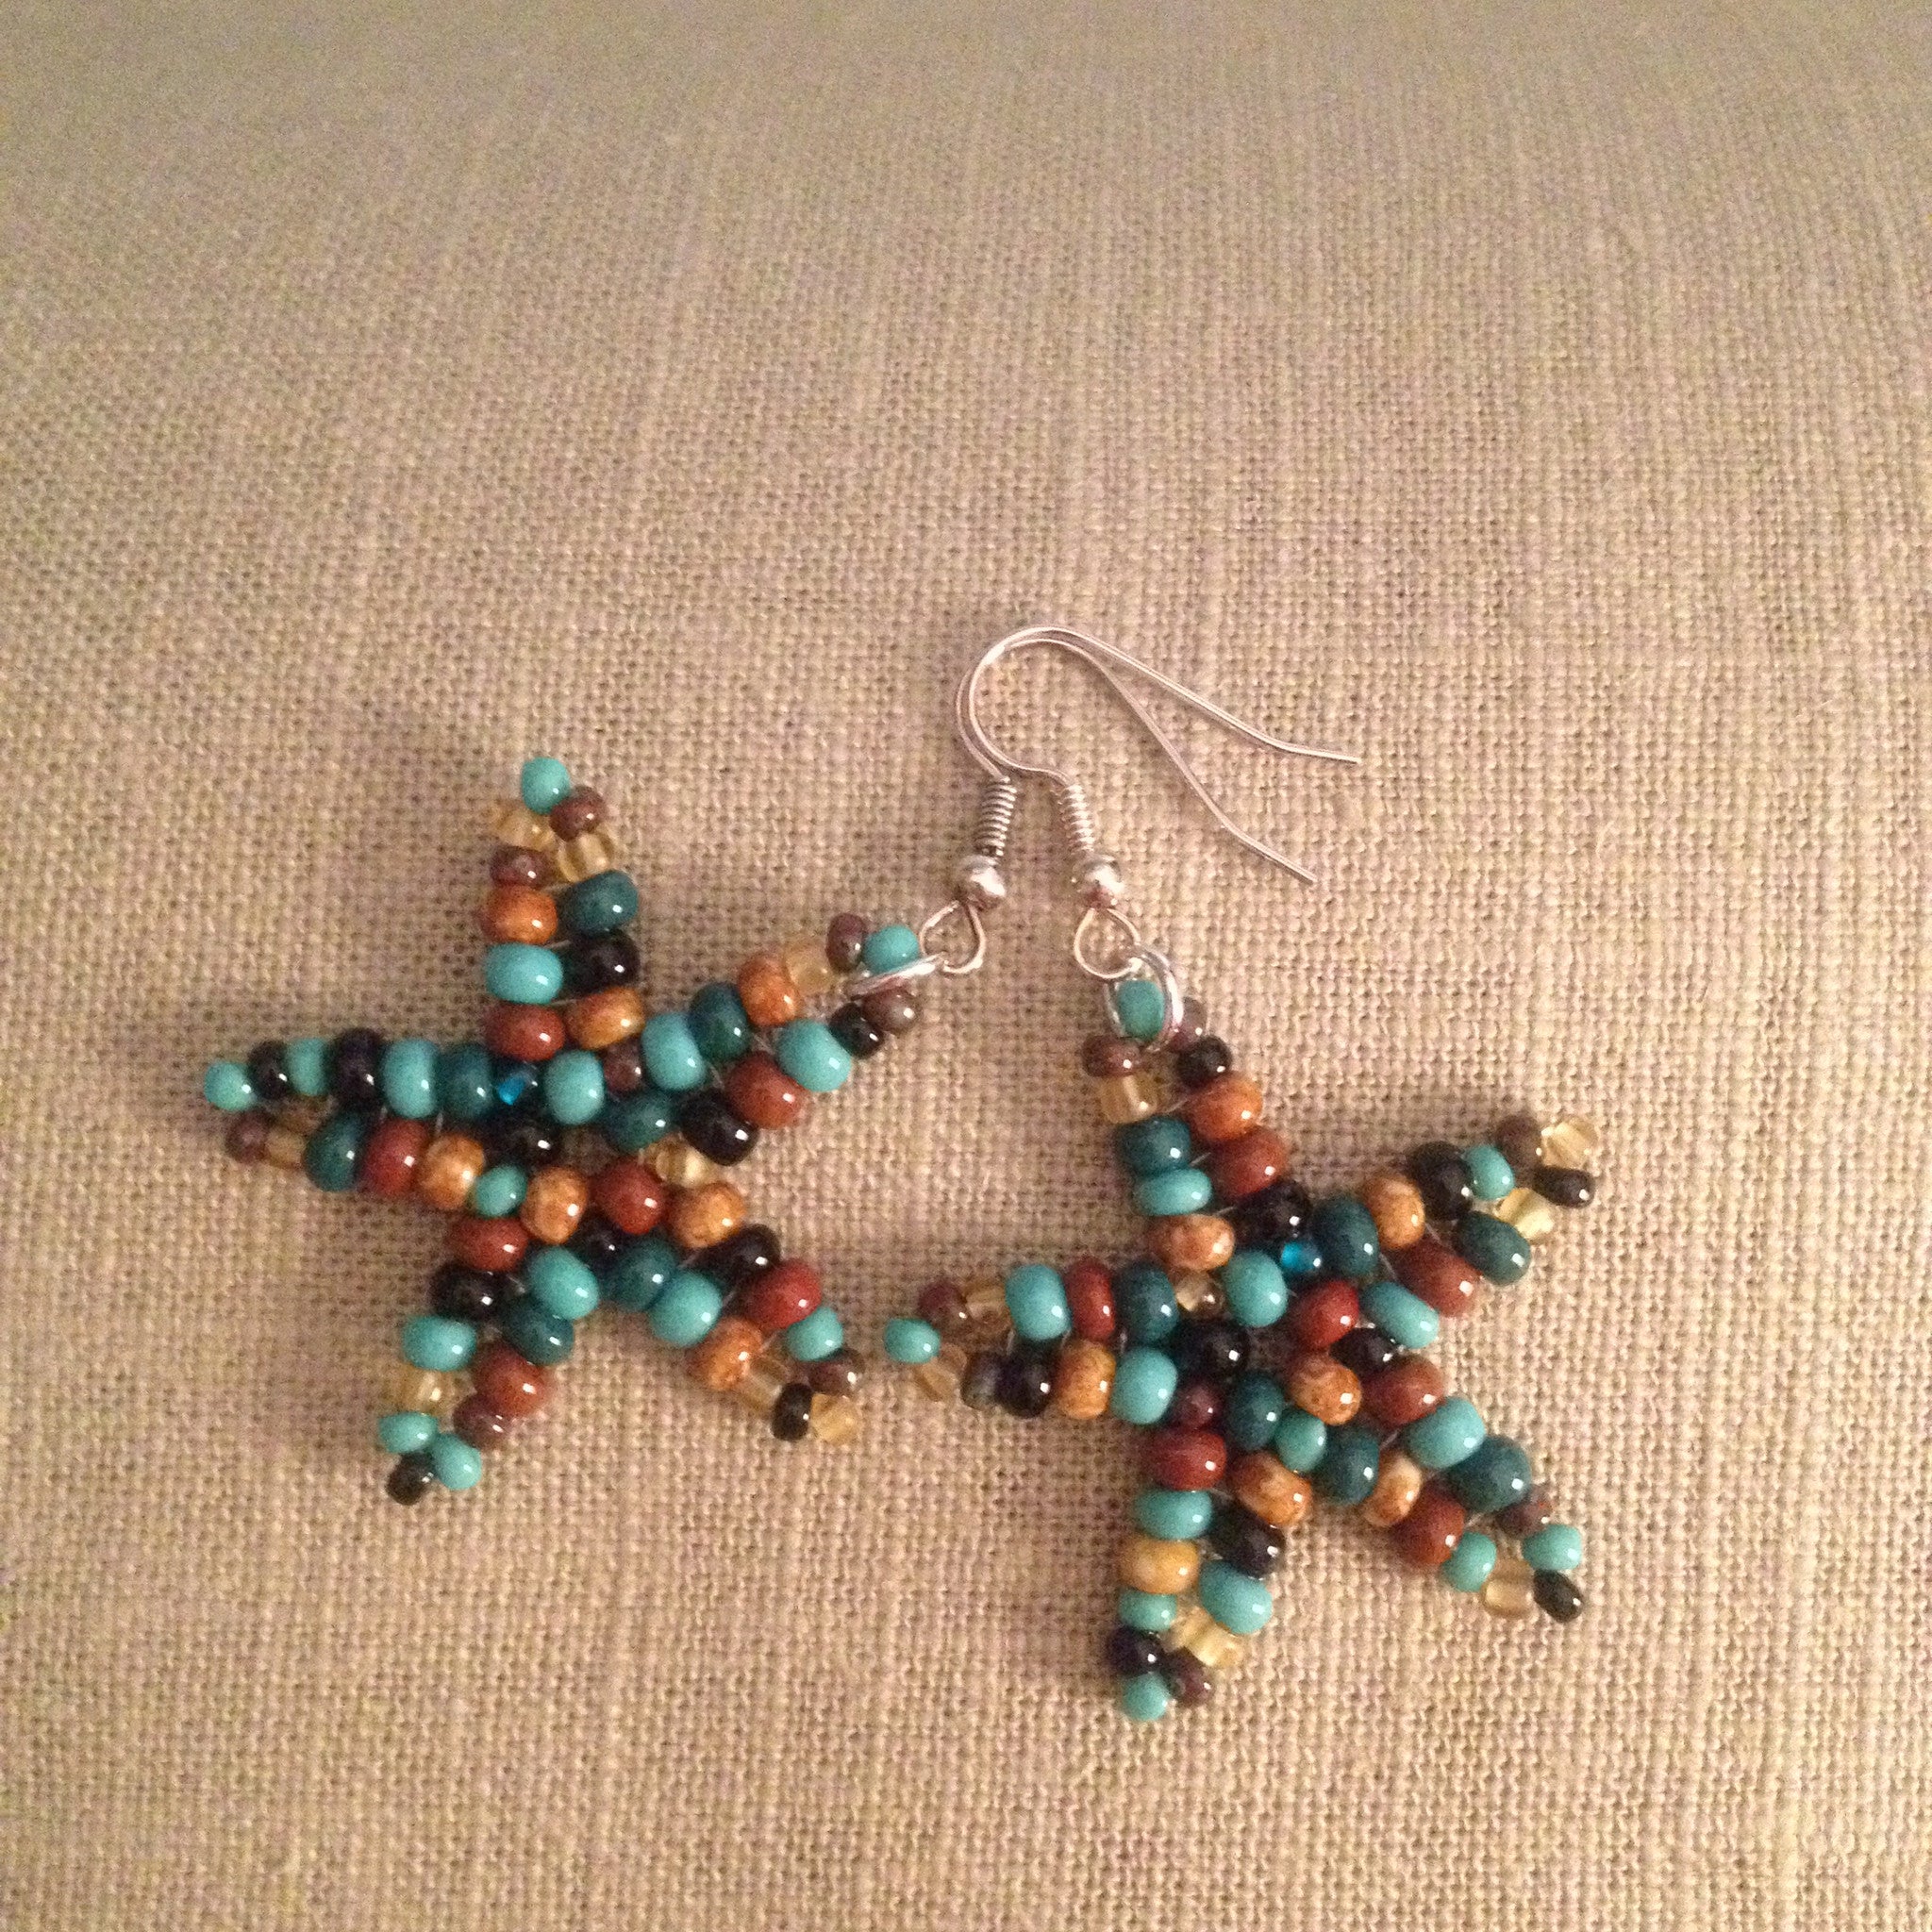 Starfish beaded earrings southwest multi colors resort cruise wear beachy fun style